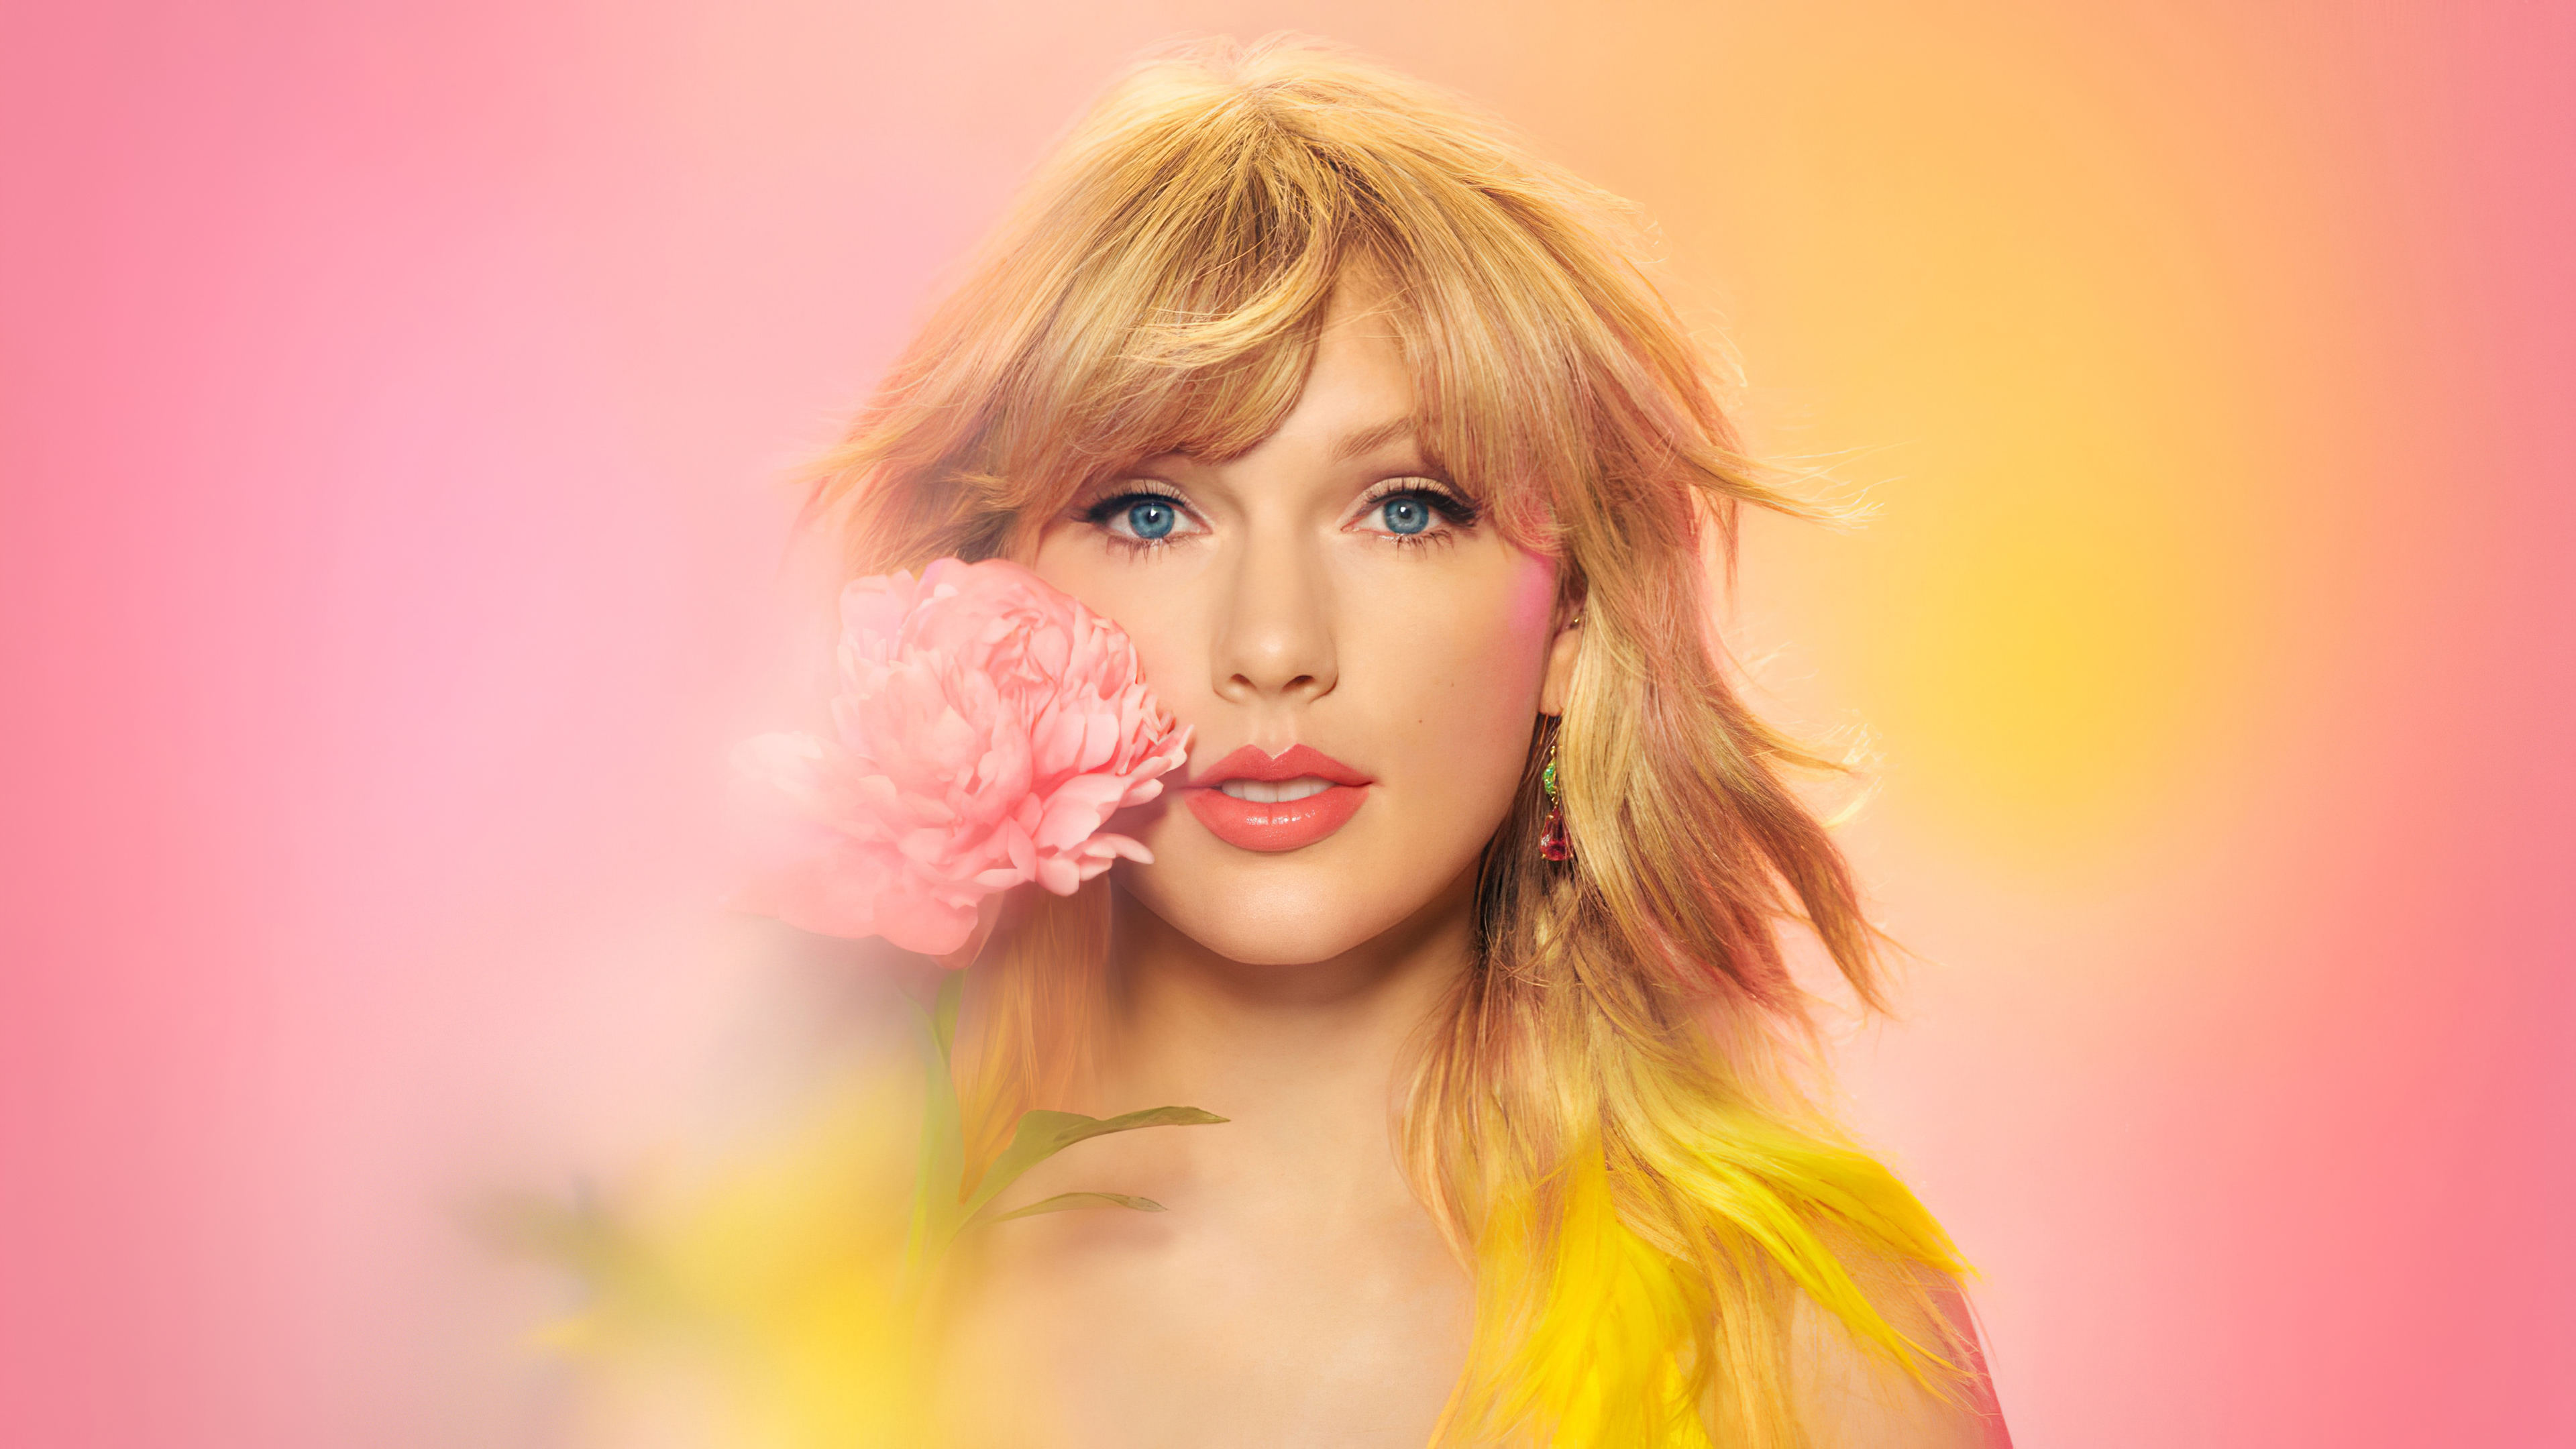 Taylor Swift For Apple Music 4k Ultra 高清壁纸 桌面背景 3840x2160 Id Wallpaper Abyss